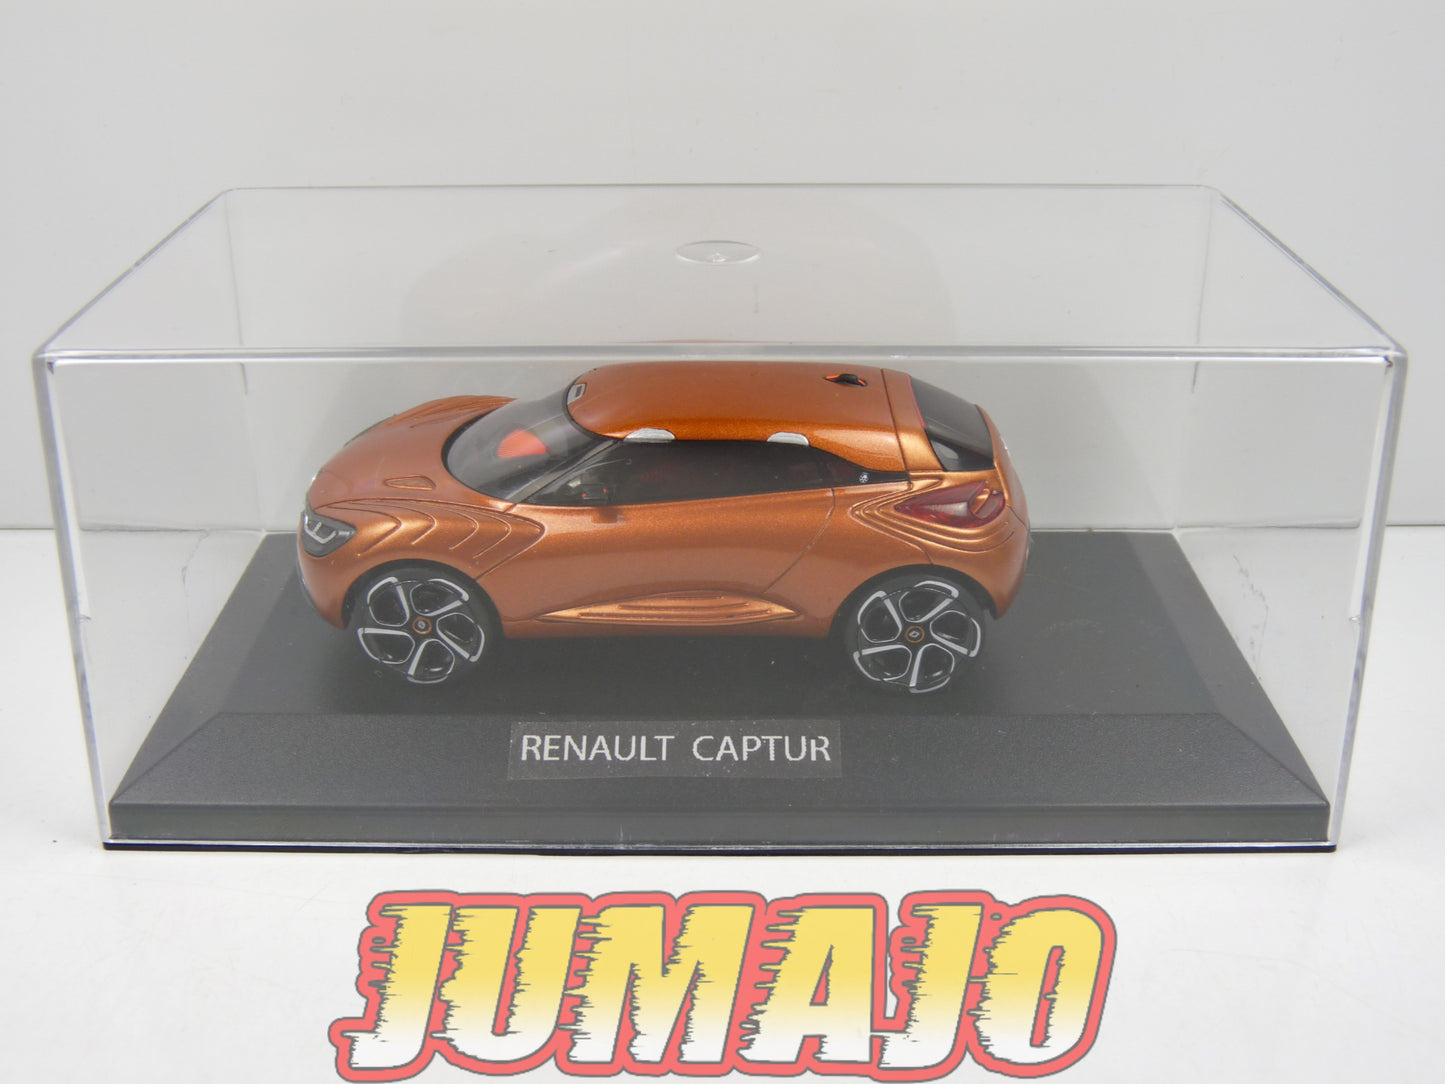 REN64 VOITURE 1/43 NOREV RENAULT Concept car Captur